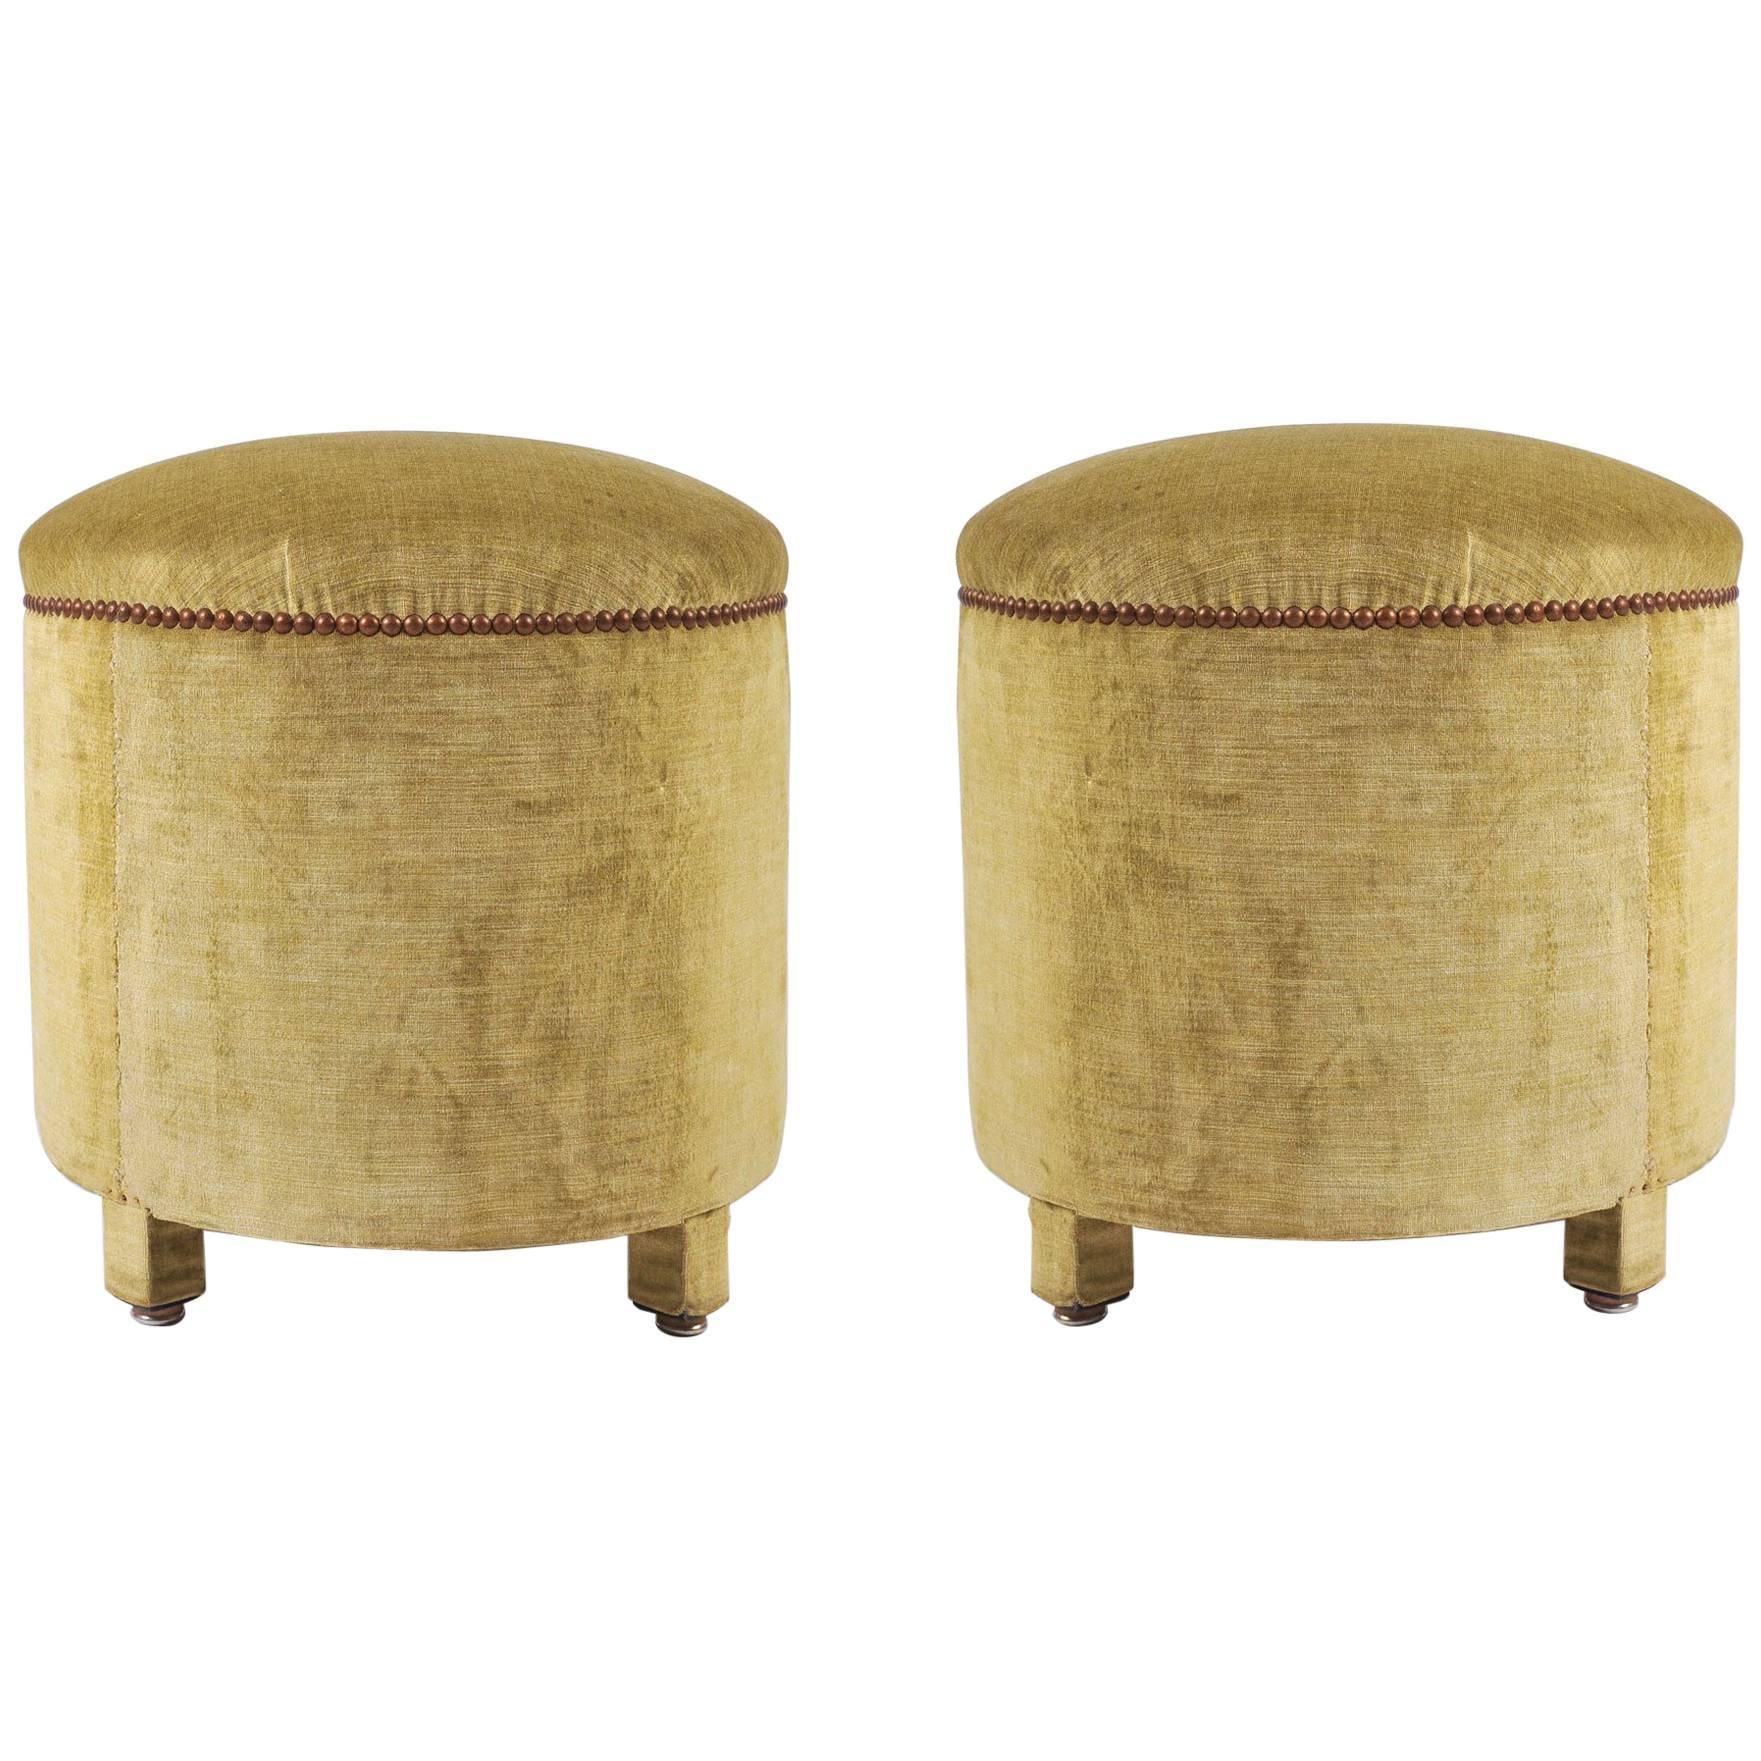 Pair of 1960s Italian Circular Upholstered Stools